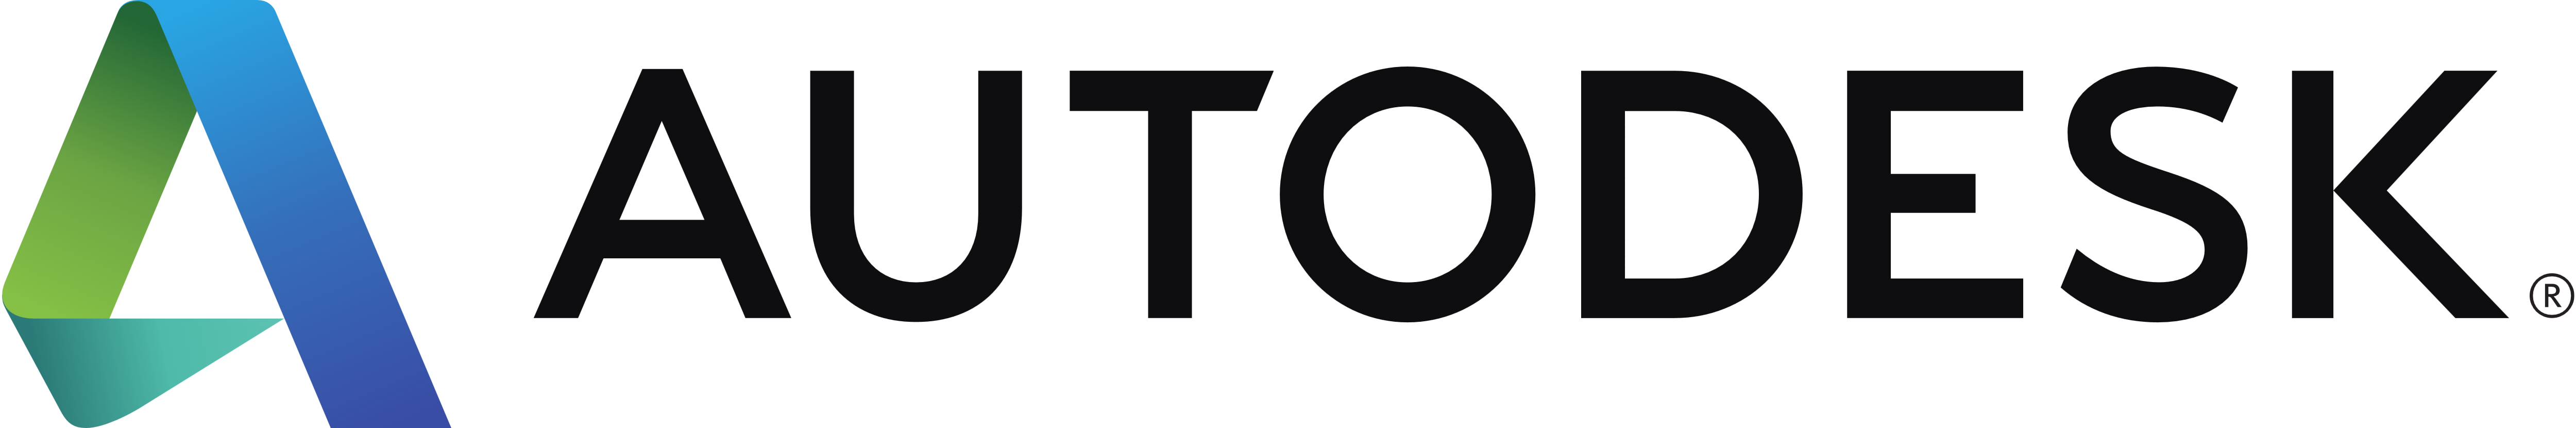 Autodesk Logo Png Transparent